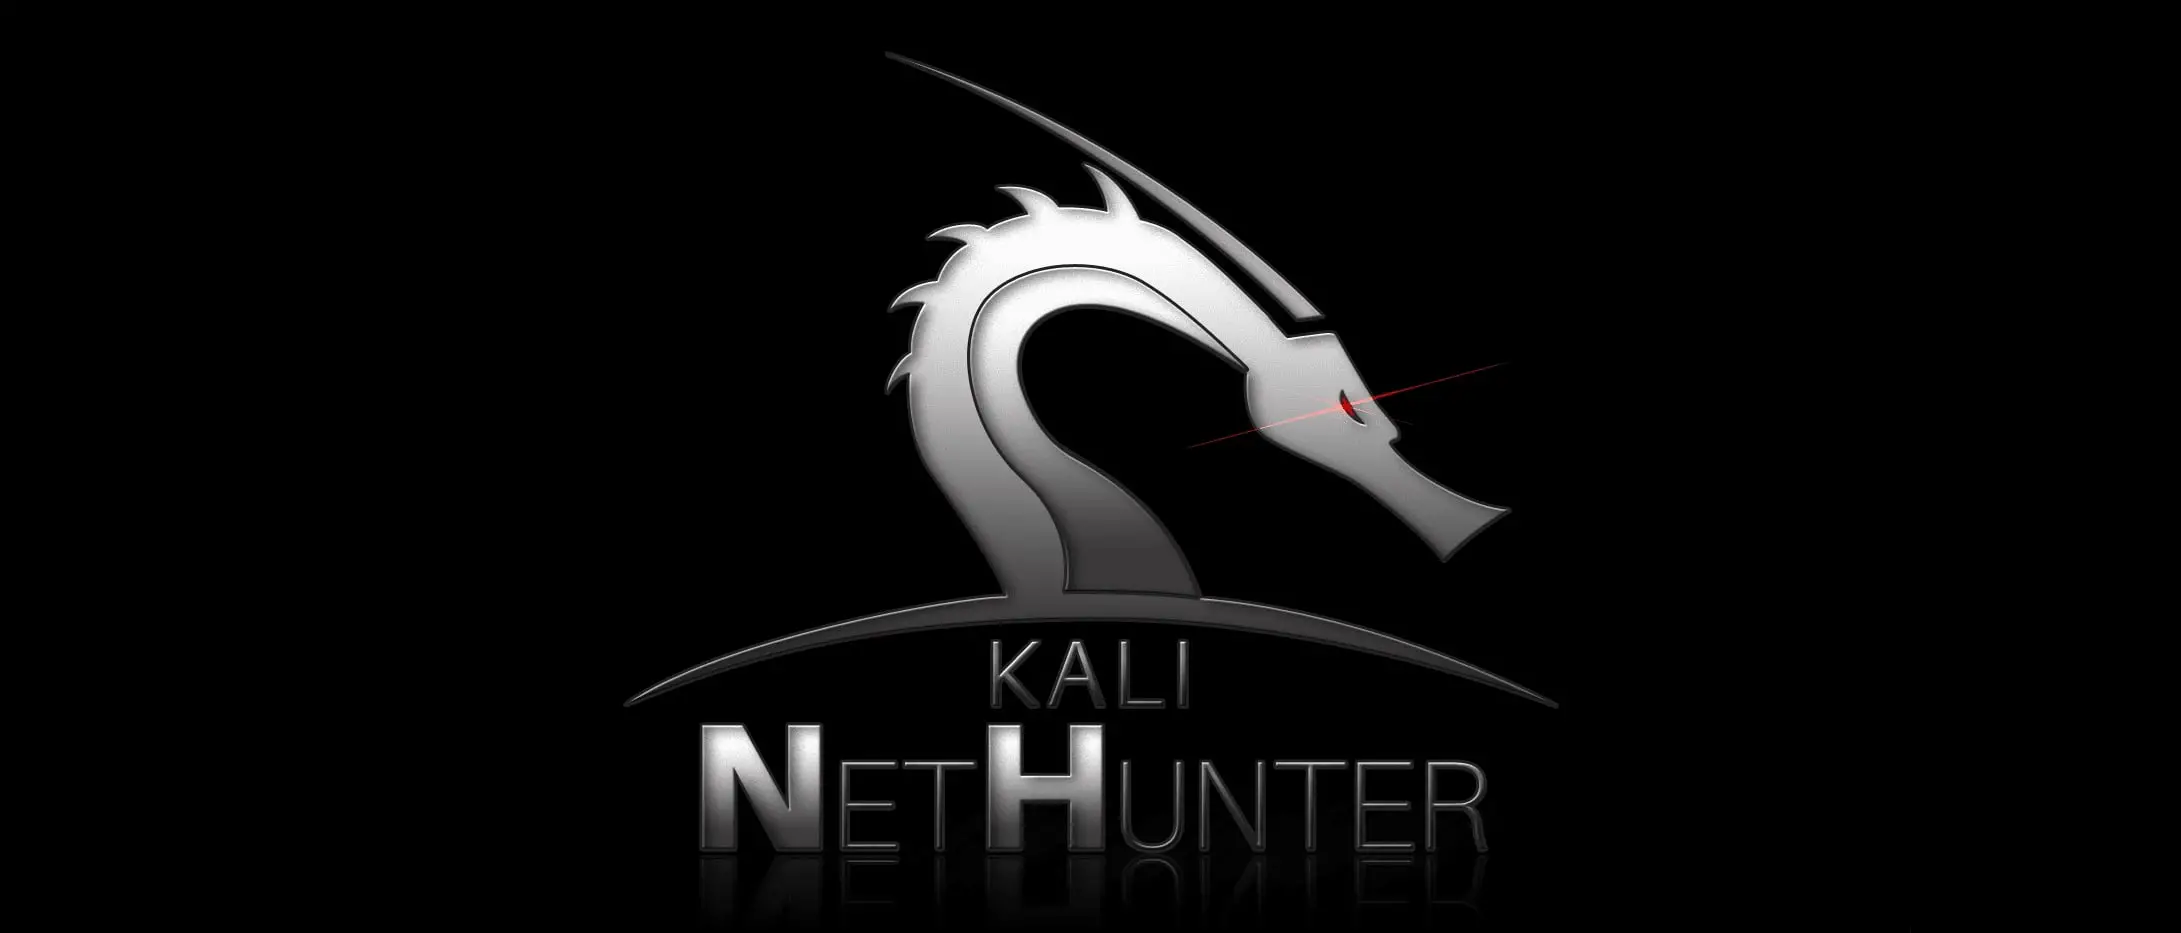 install kali nethunter on any android device